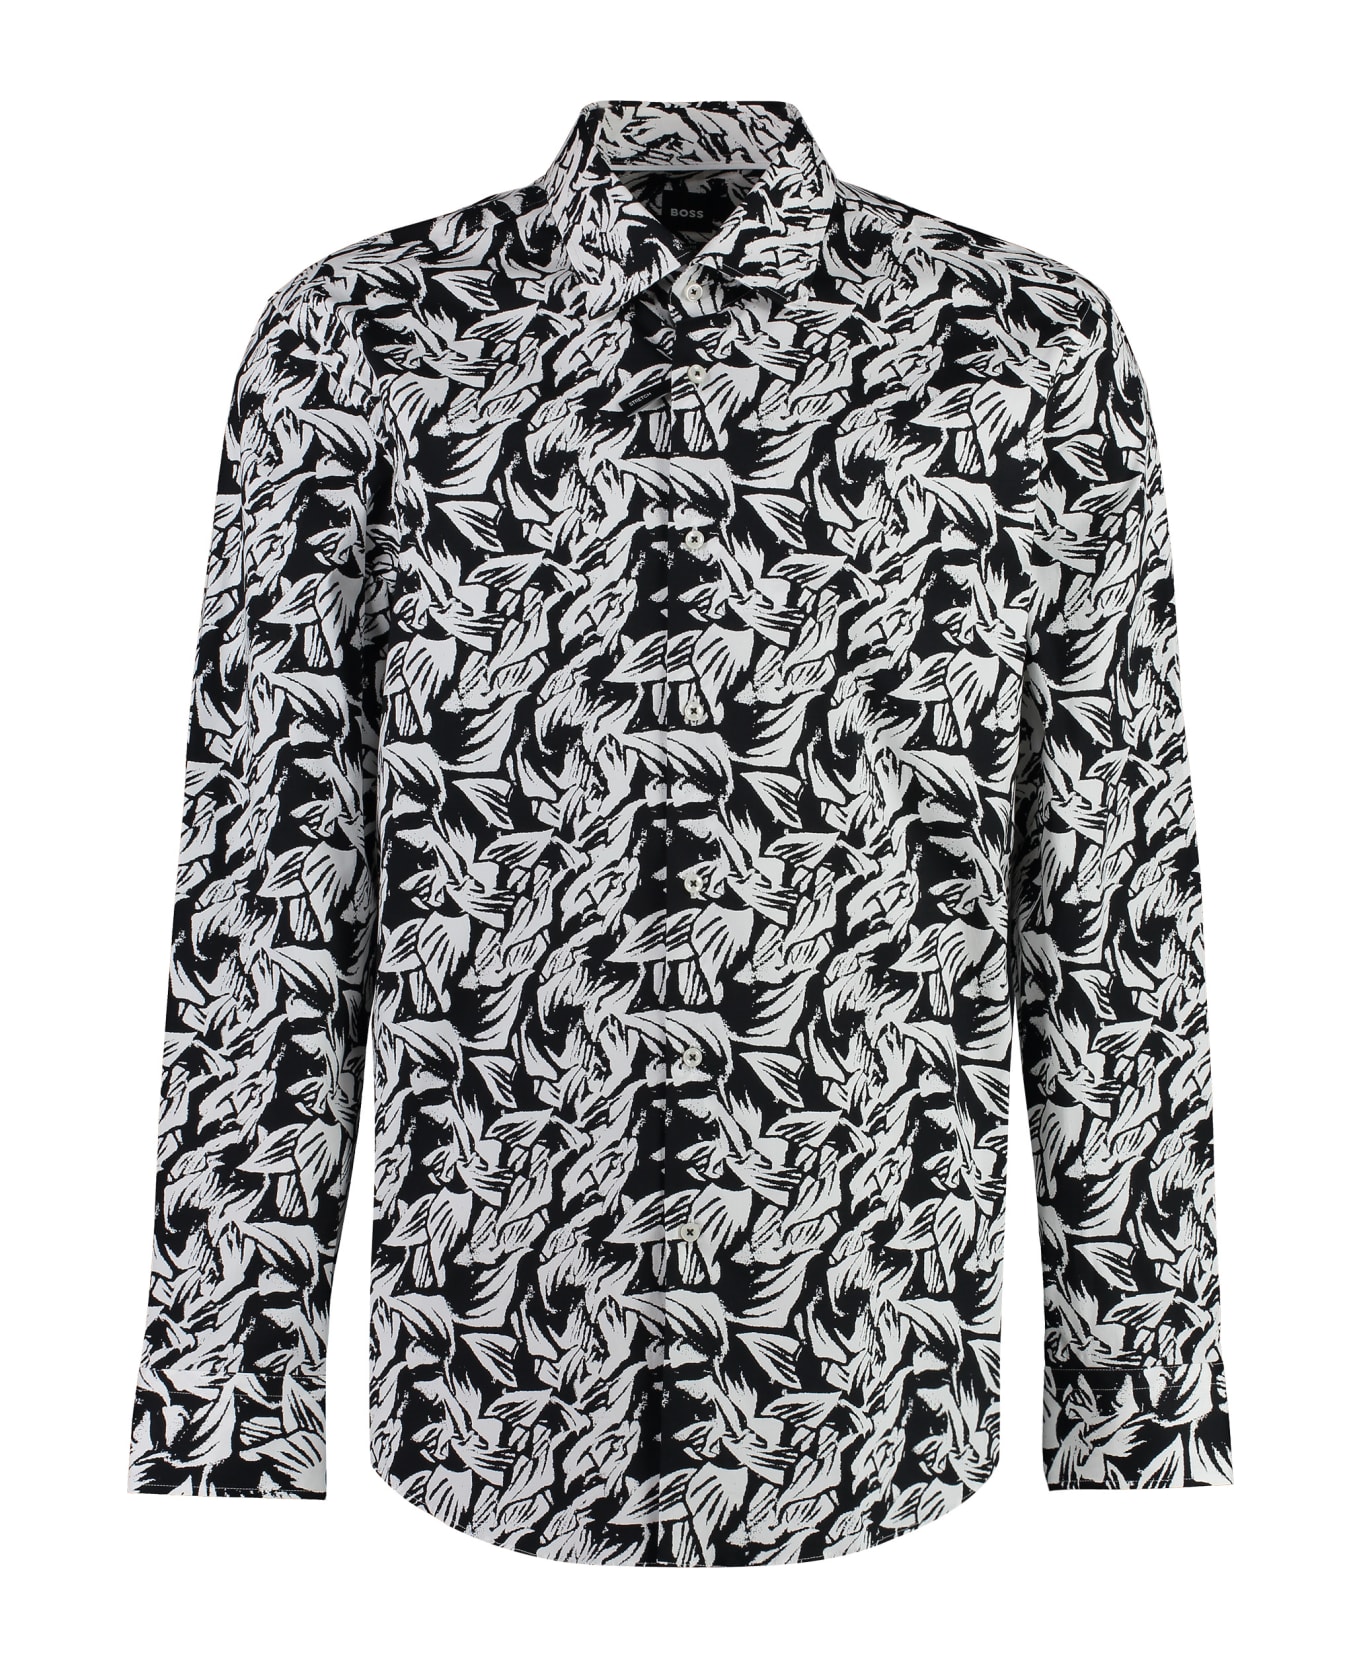 Hugo Boss Printed Cotton Shirt - black